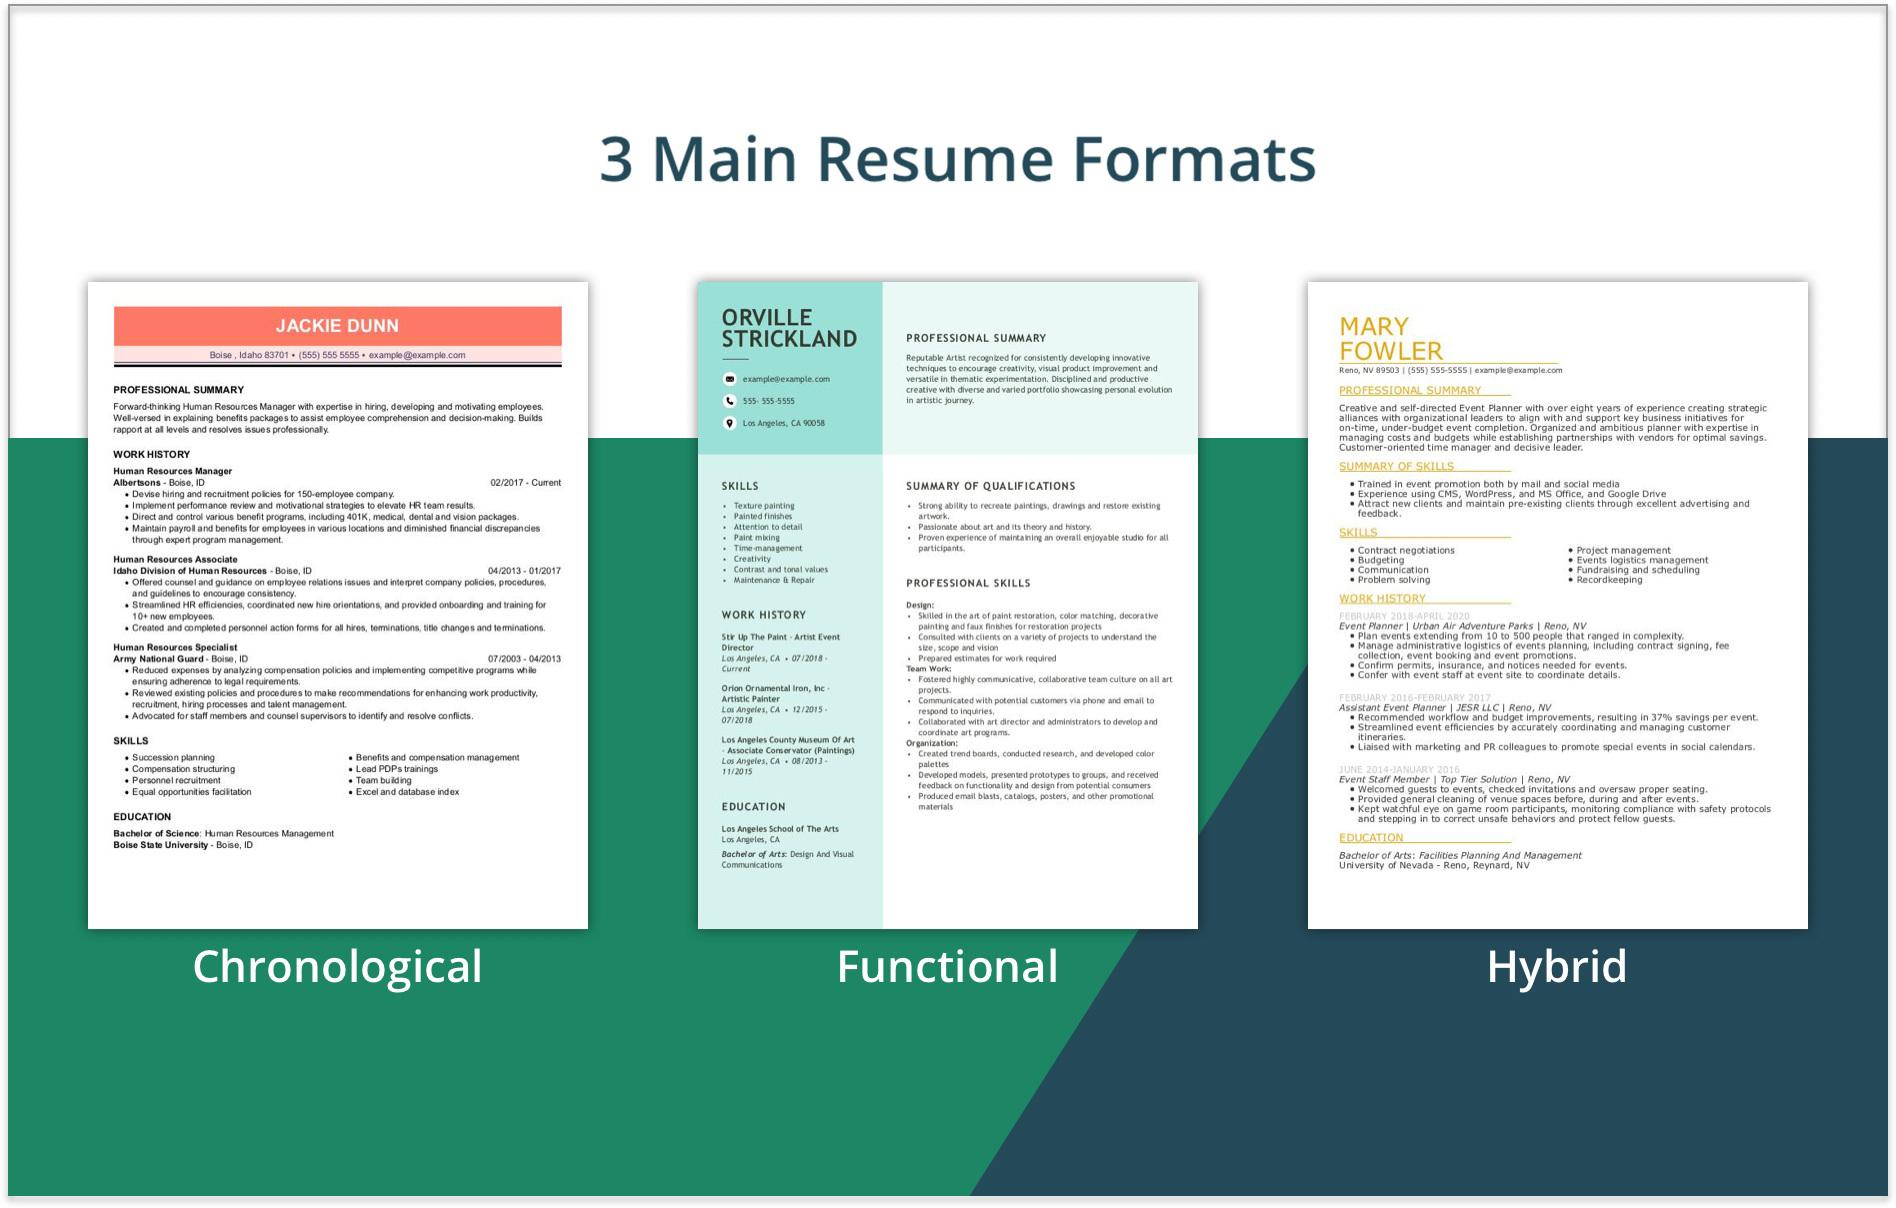 Three Main Resume Formats